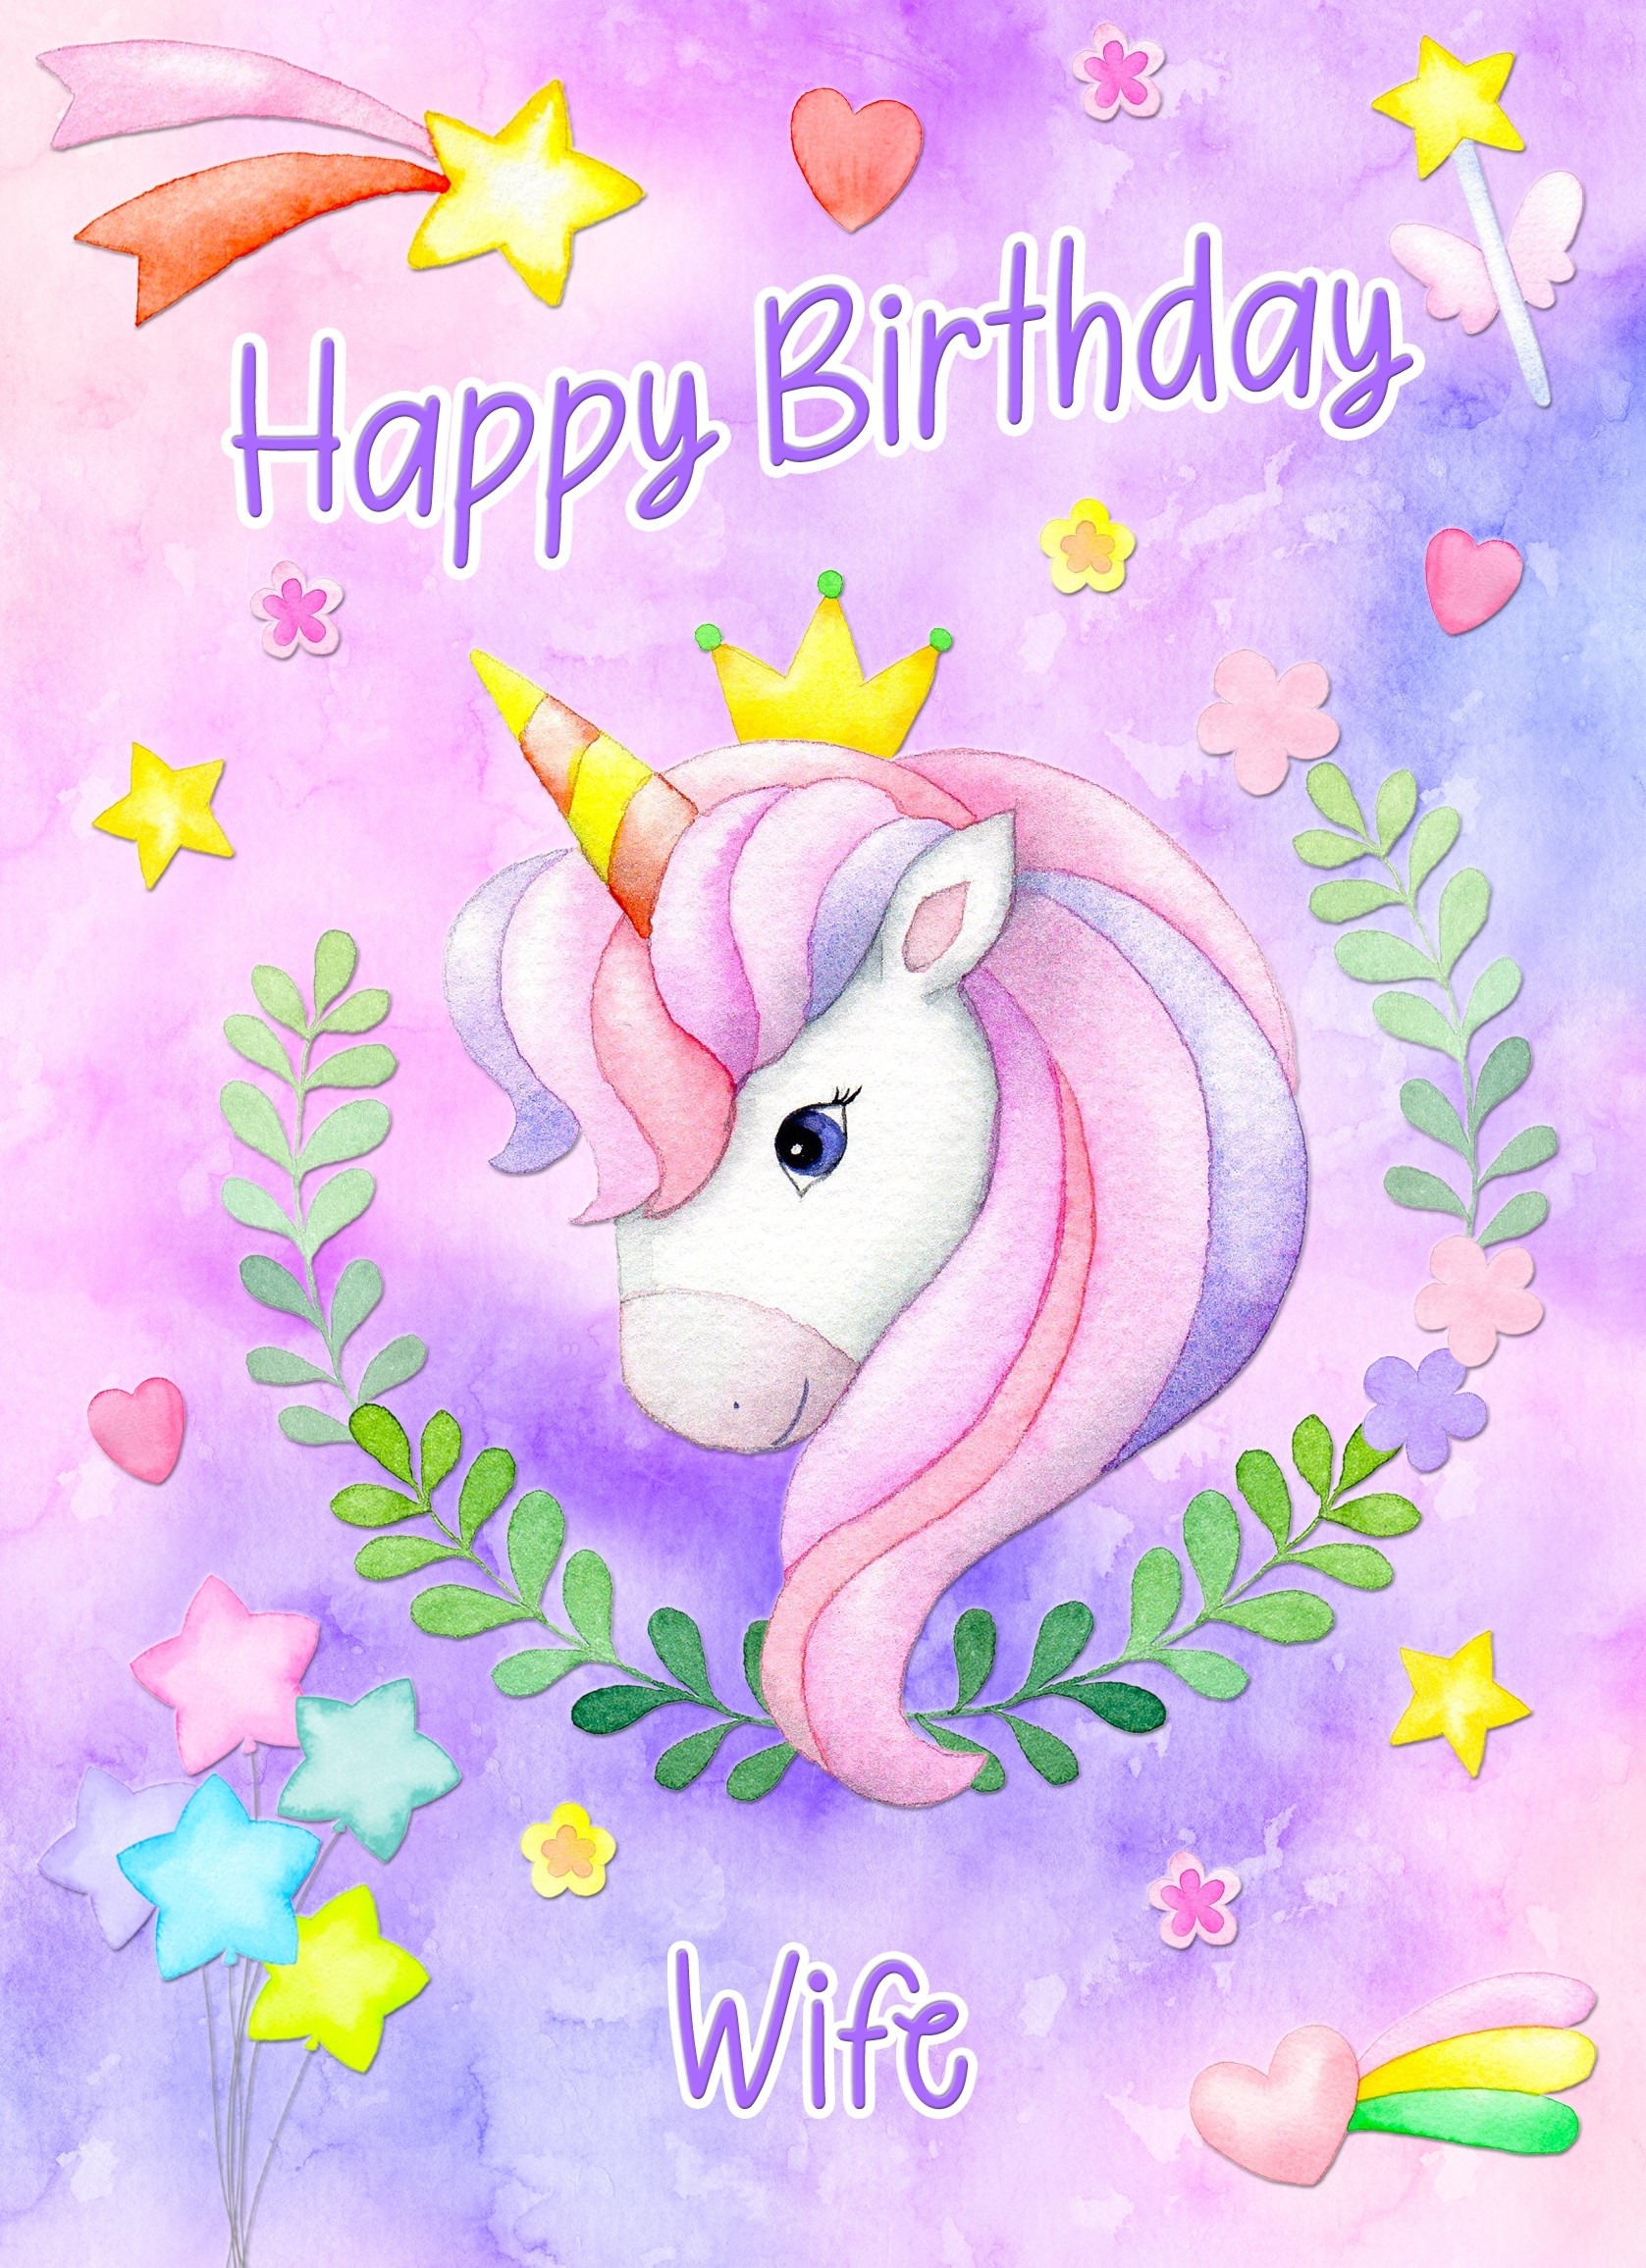 Birthday Card For Wife (Unicorn, Lilac)